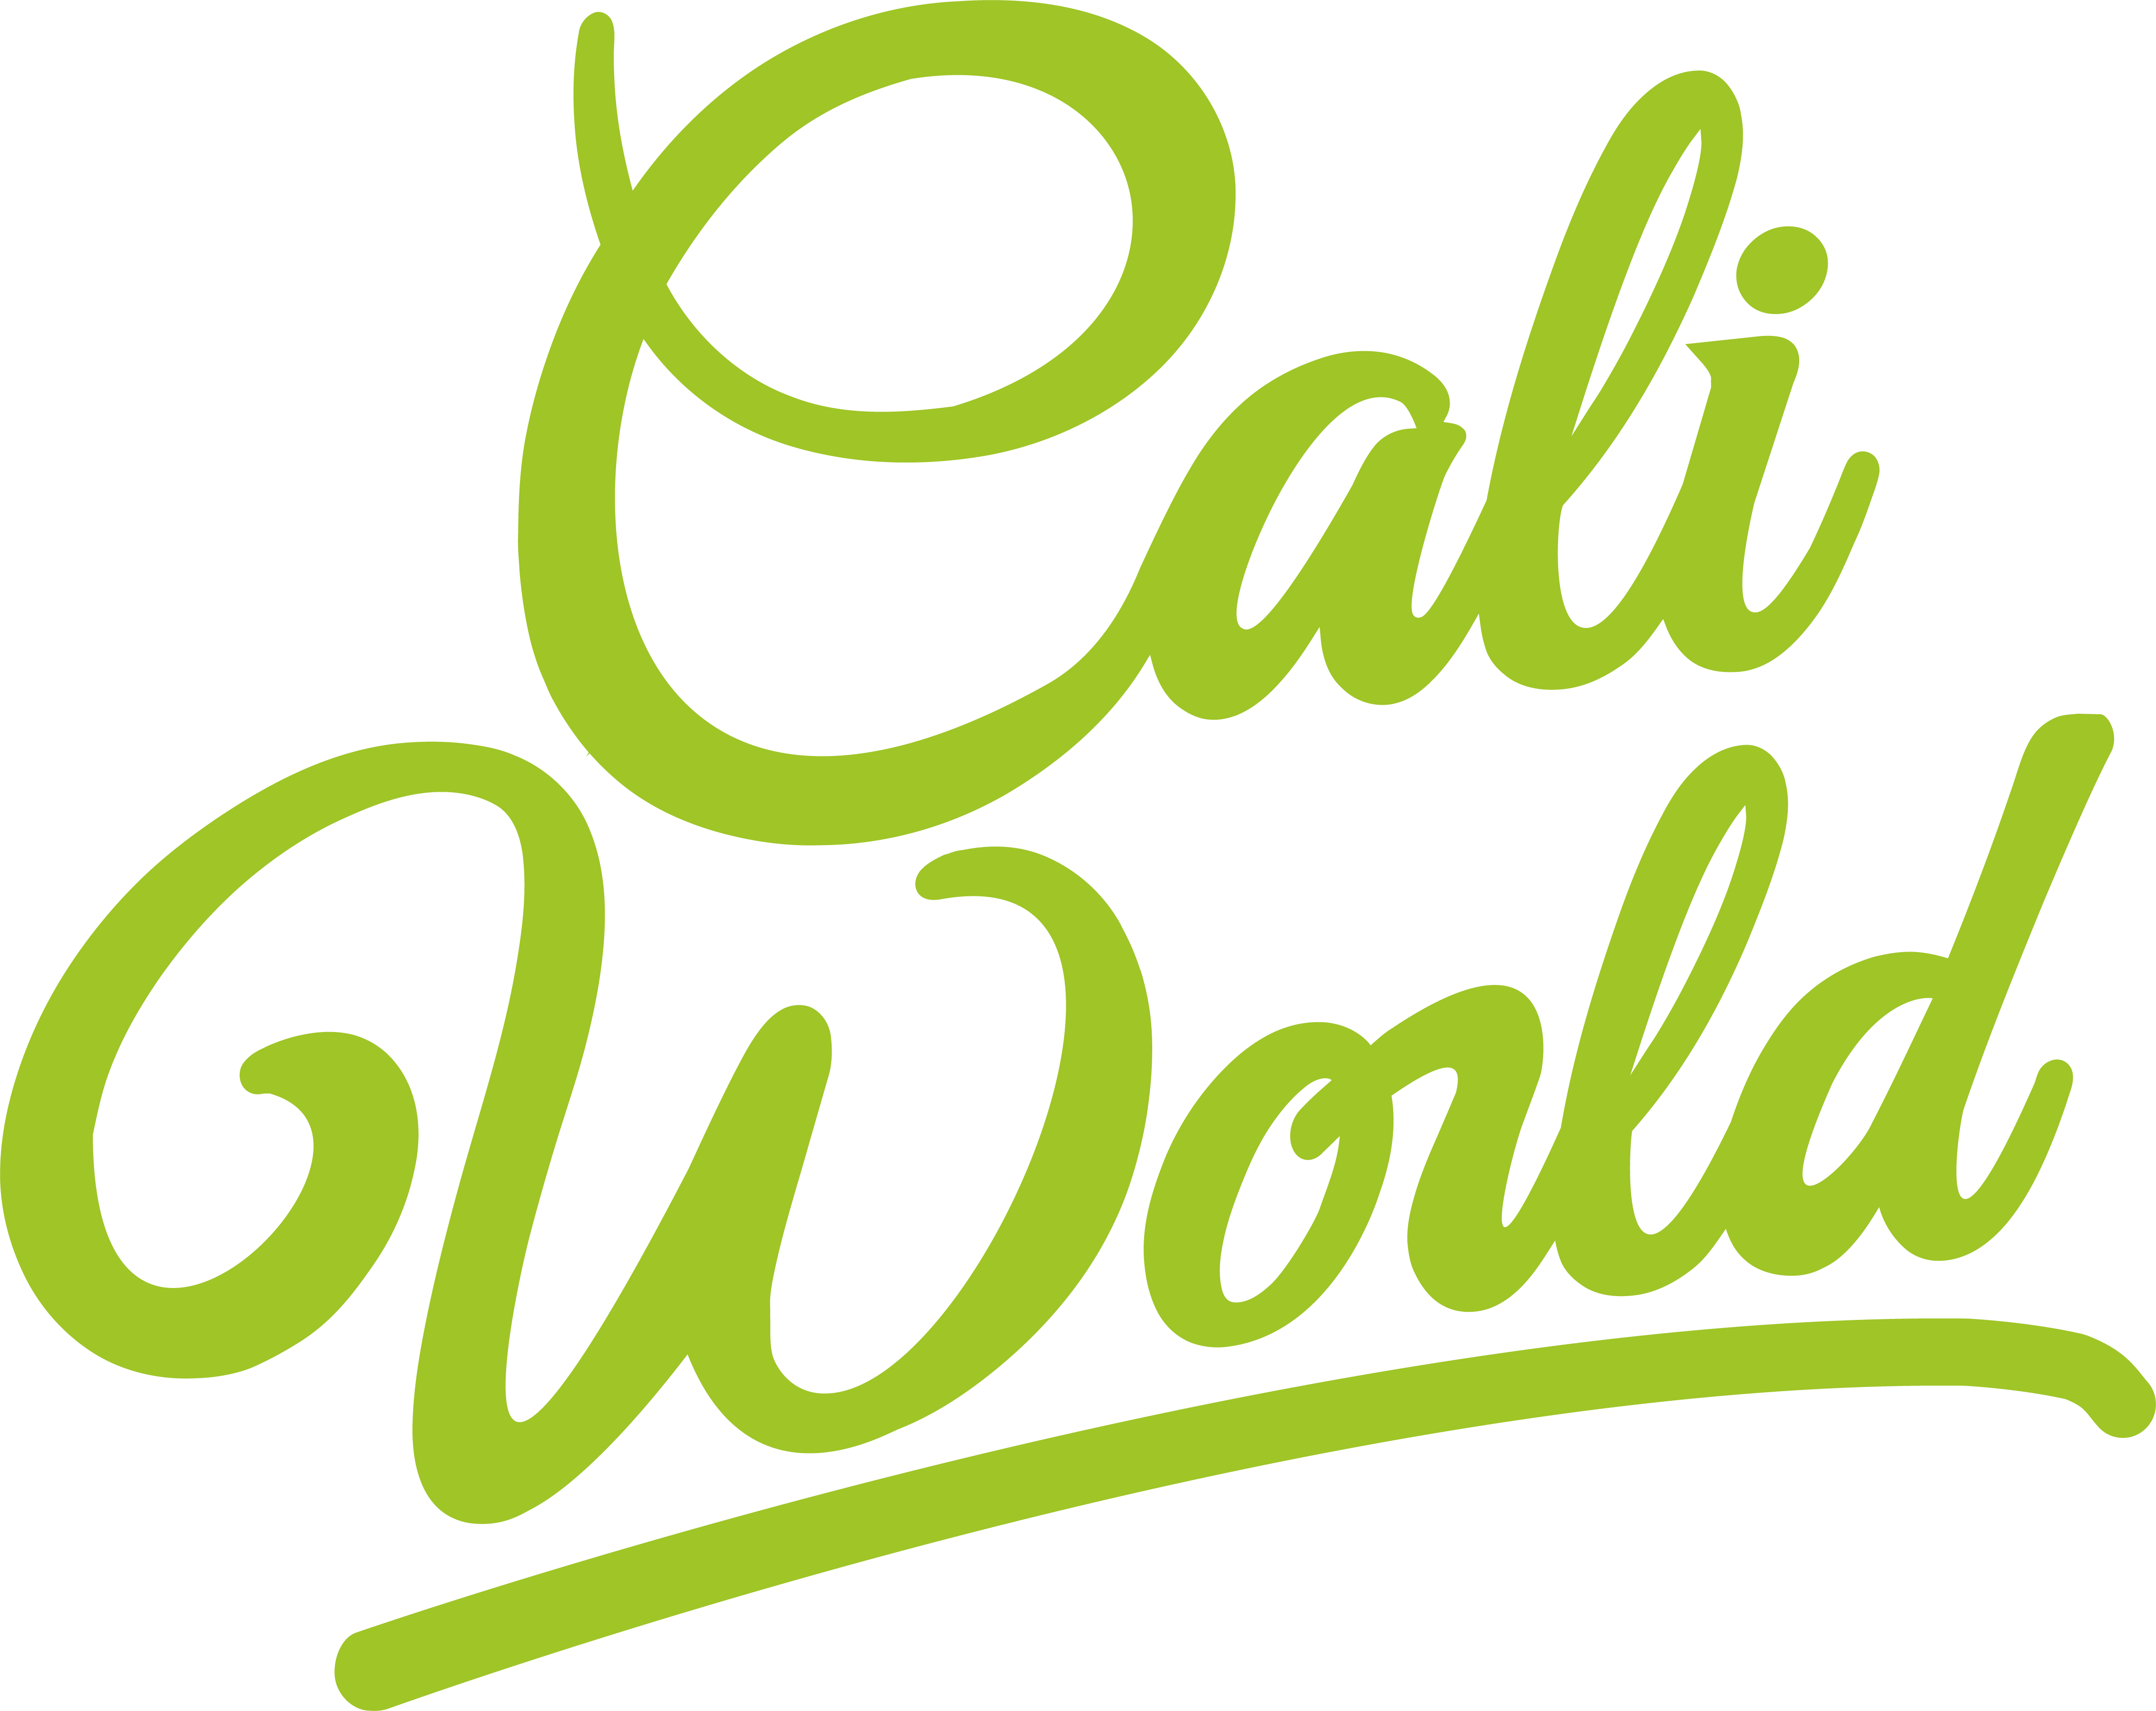 (c) Cali-world.com